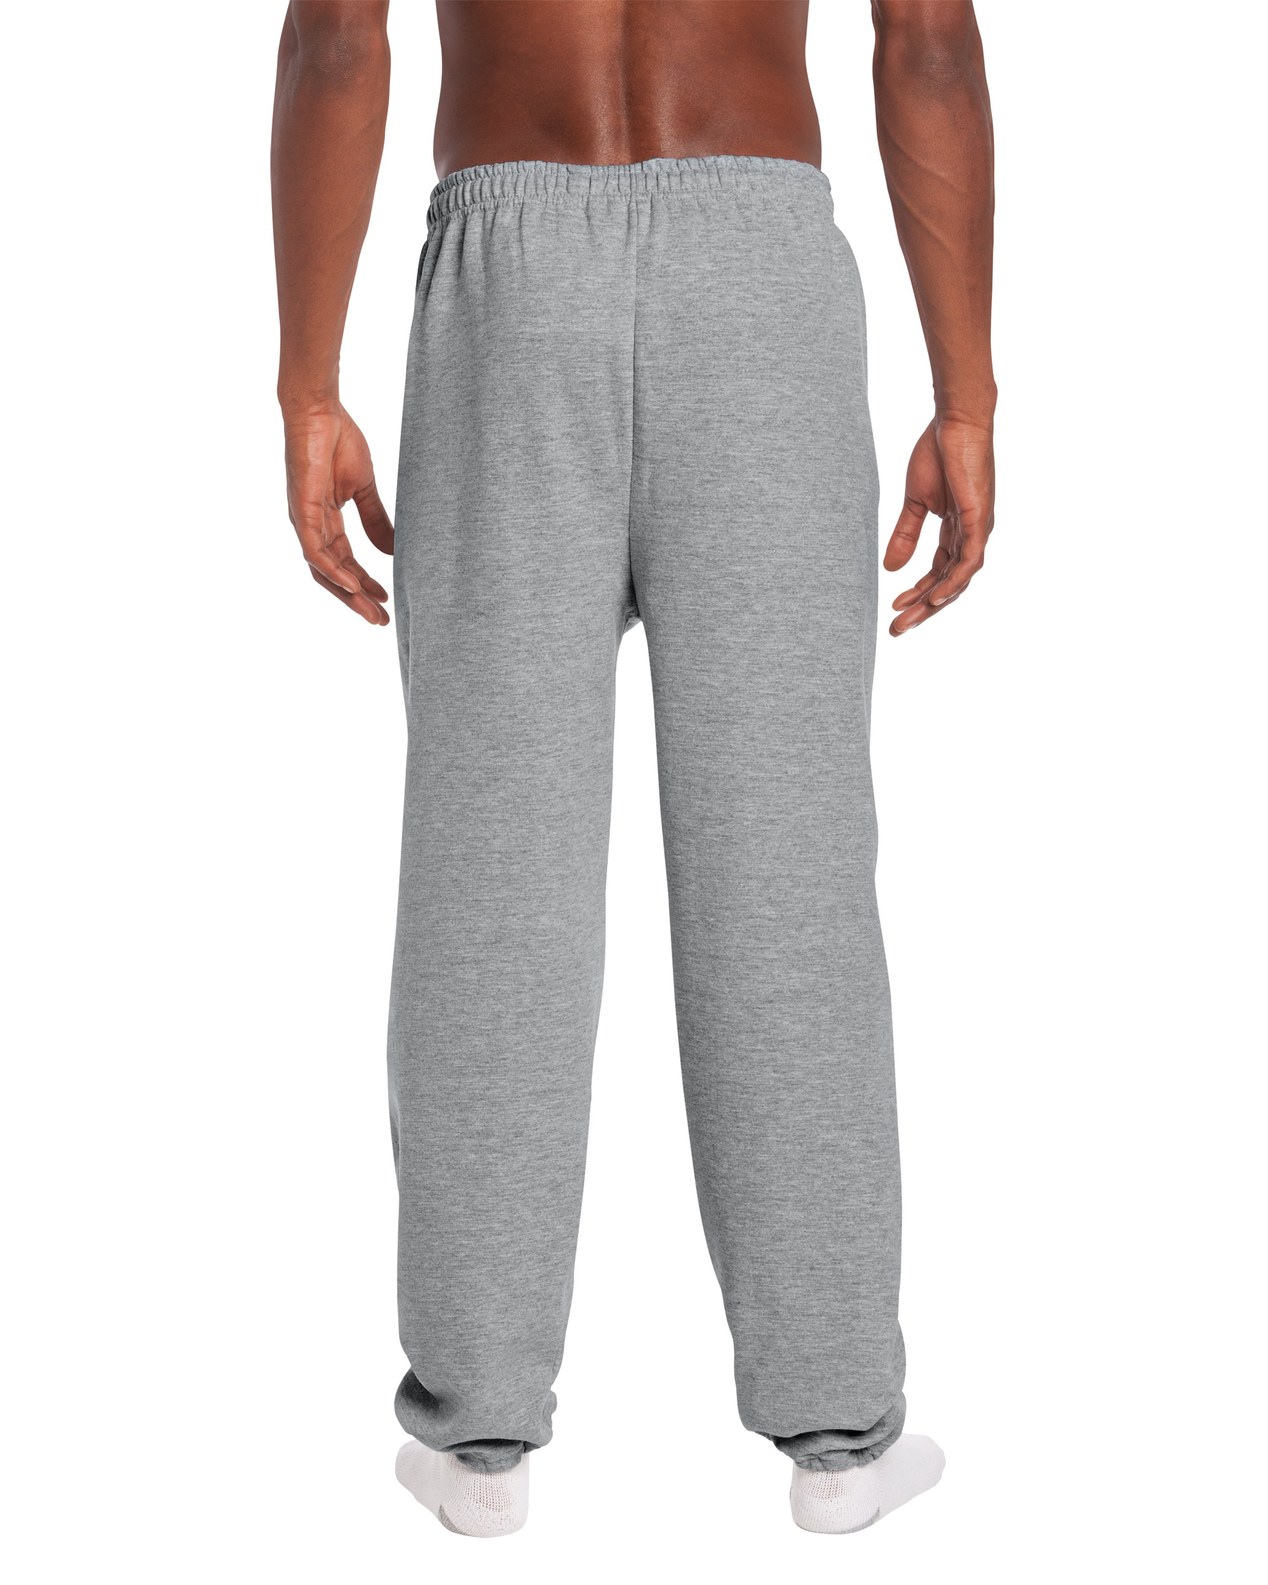 Gildan Sweatpants for Men Sports Gray Joggers Pants Elastic waistband ...